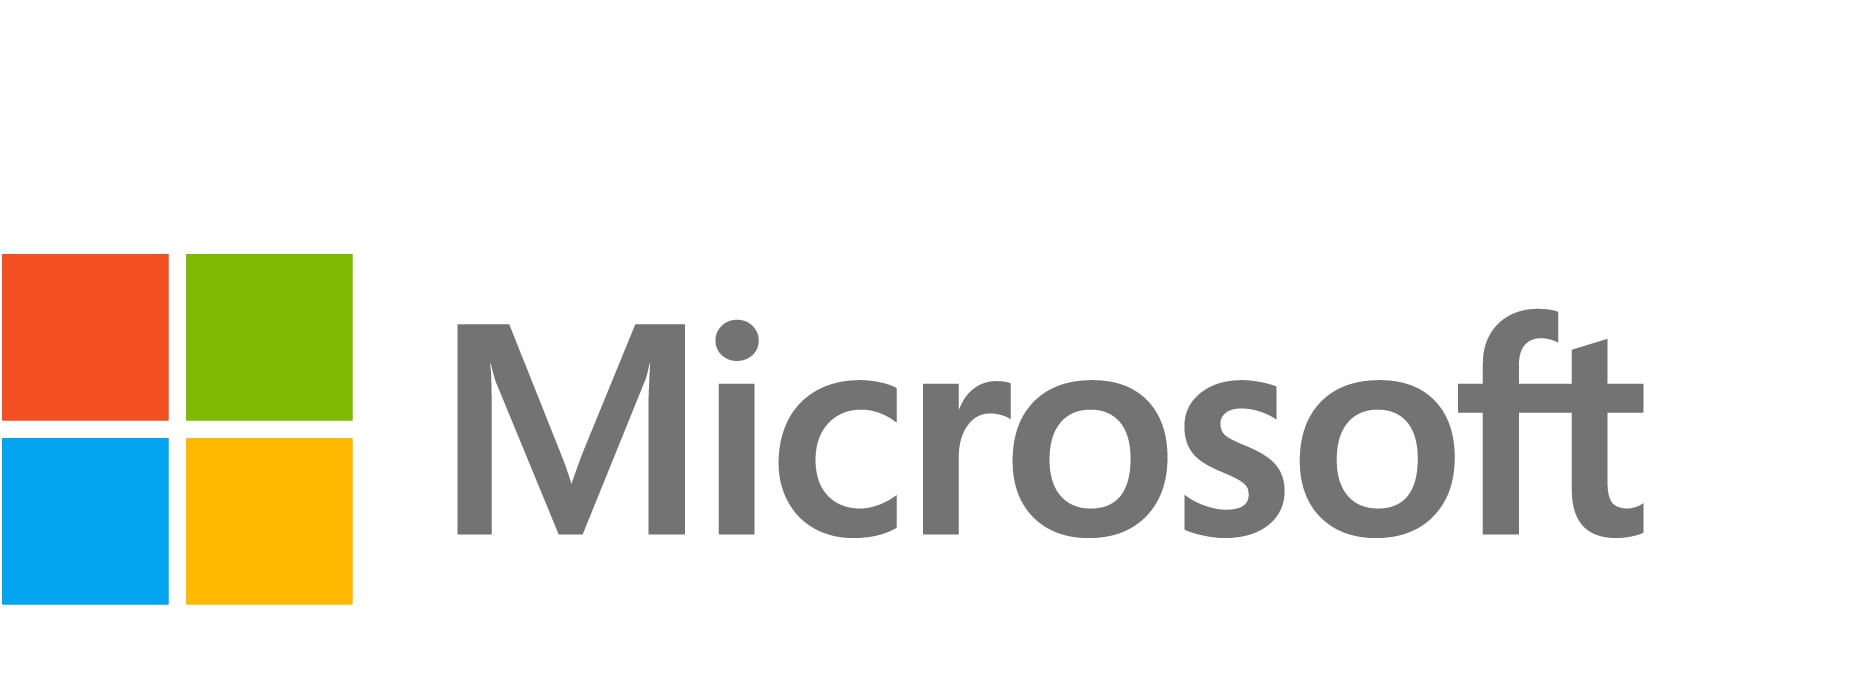 Microsoft Teams Phone Standard - subscription license (1 year) - 1 license